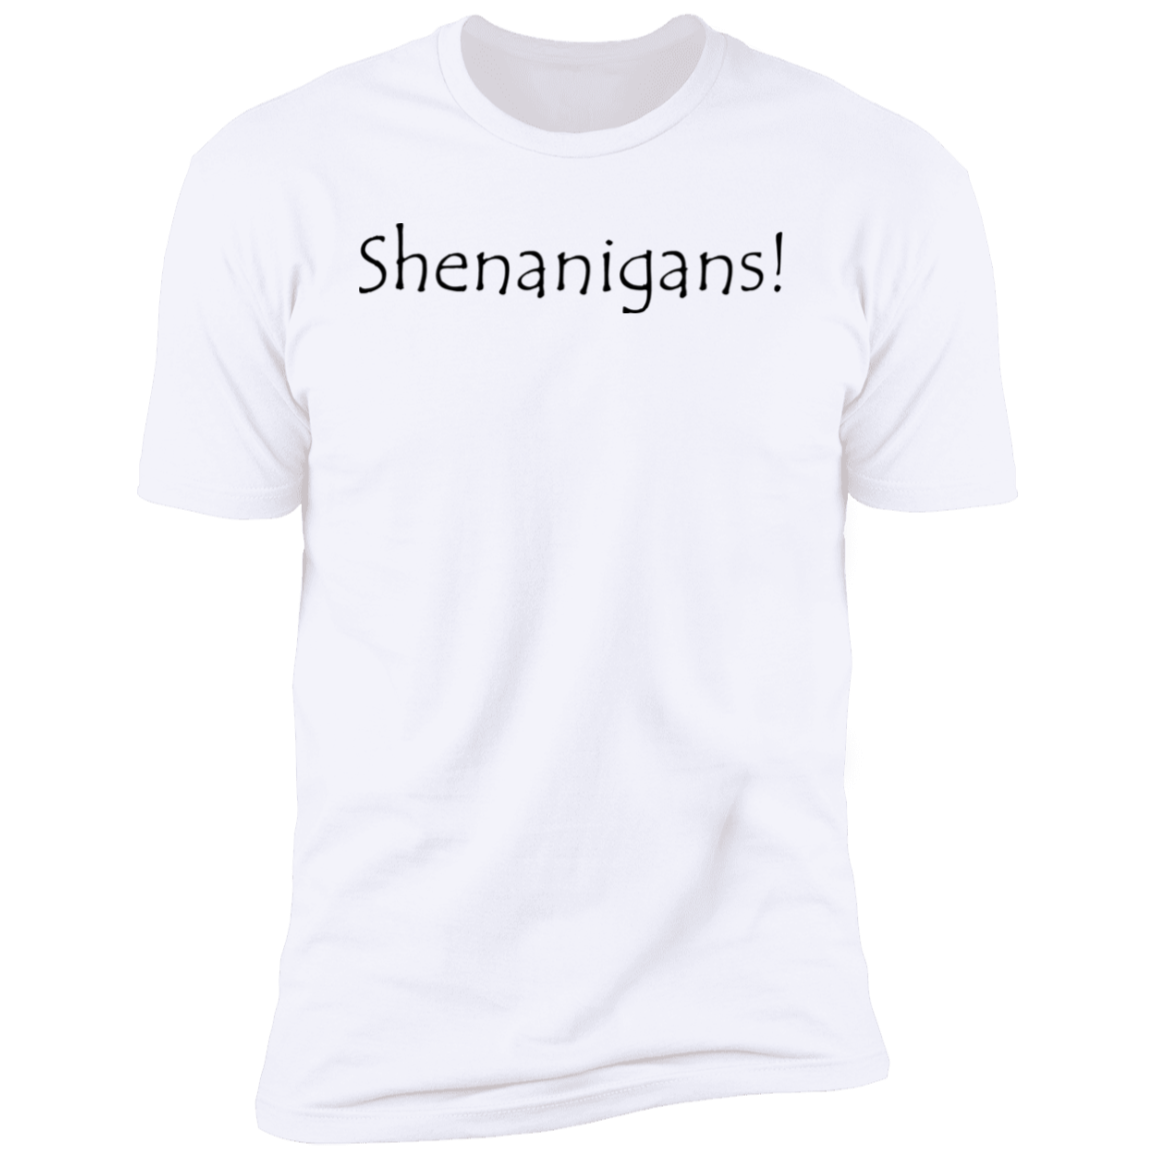 Shenanigans Shirt (Black Graphic)